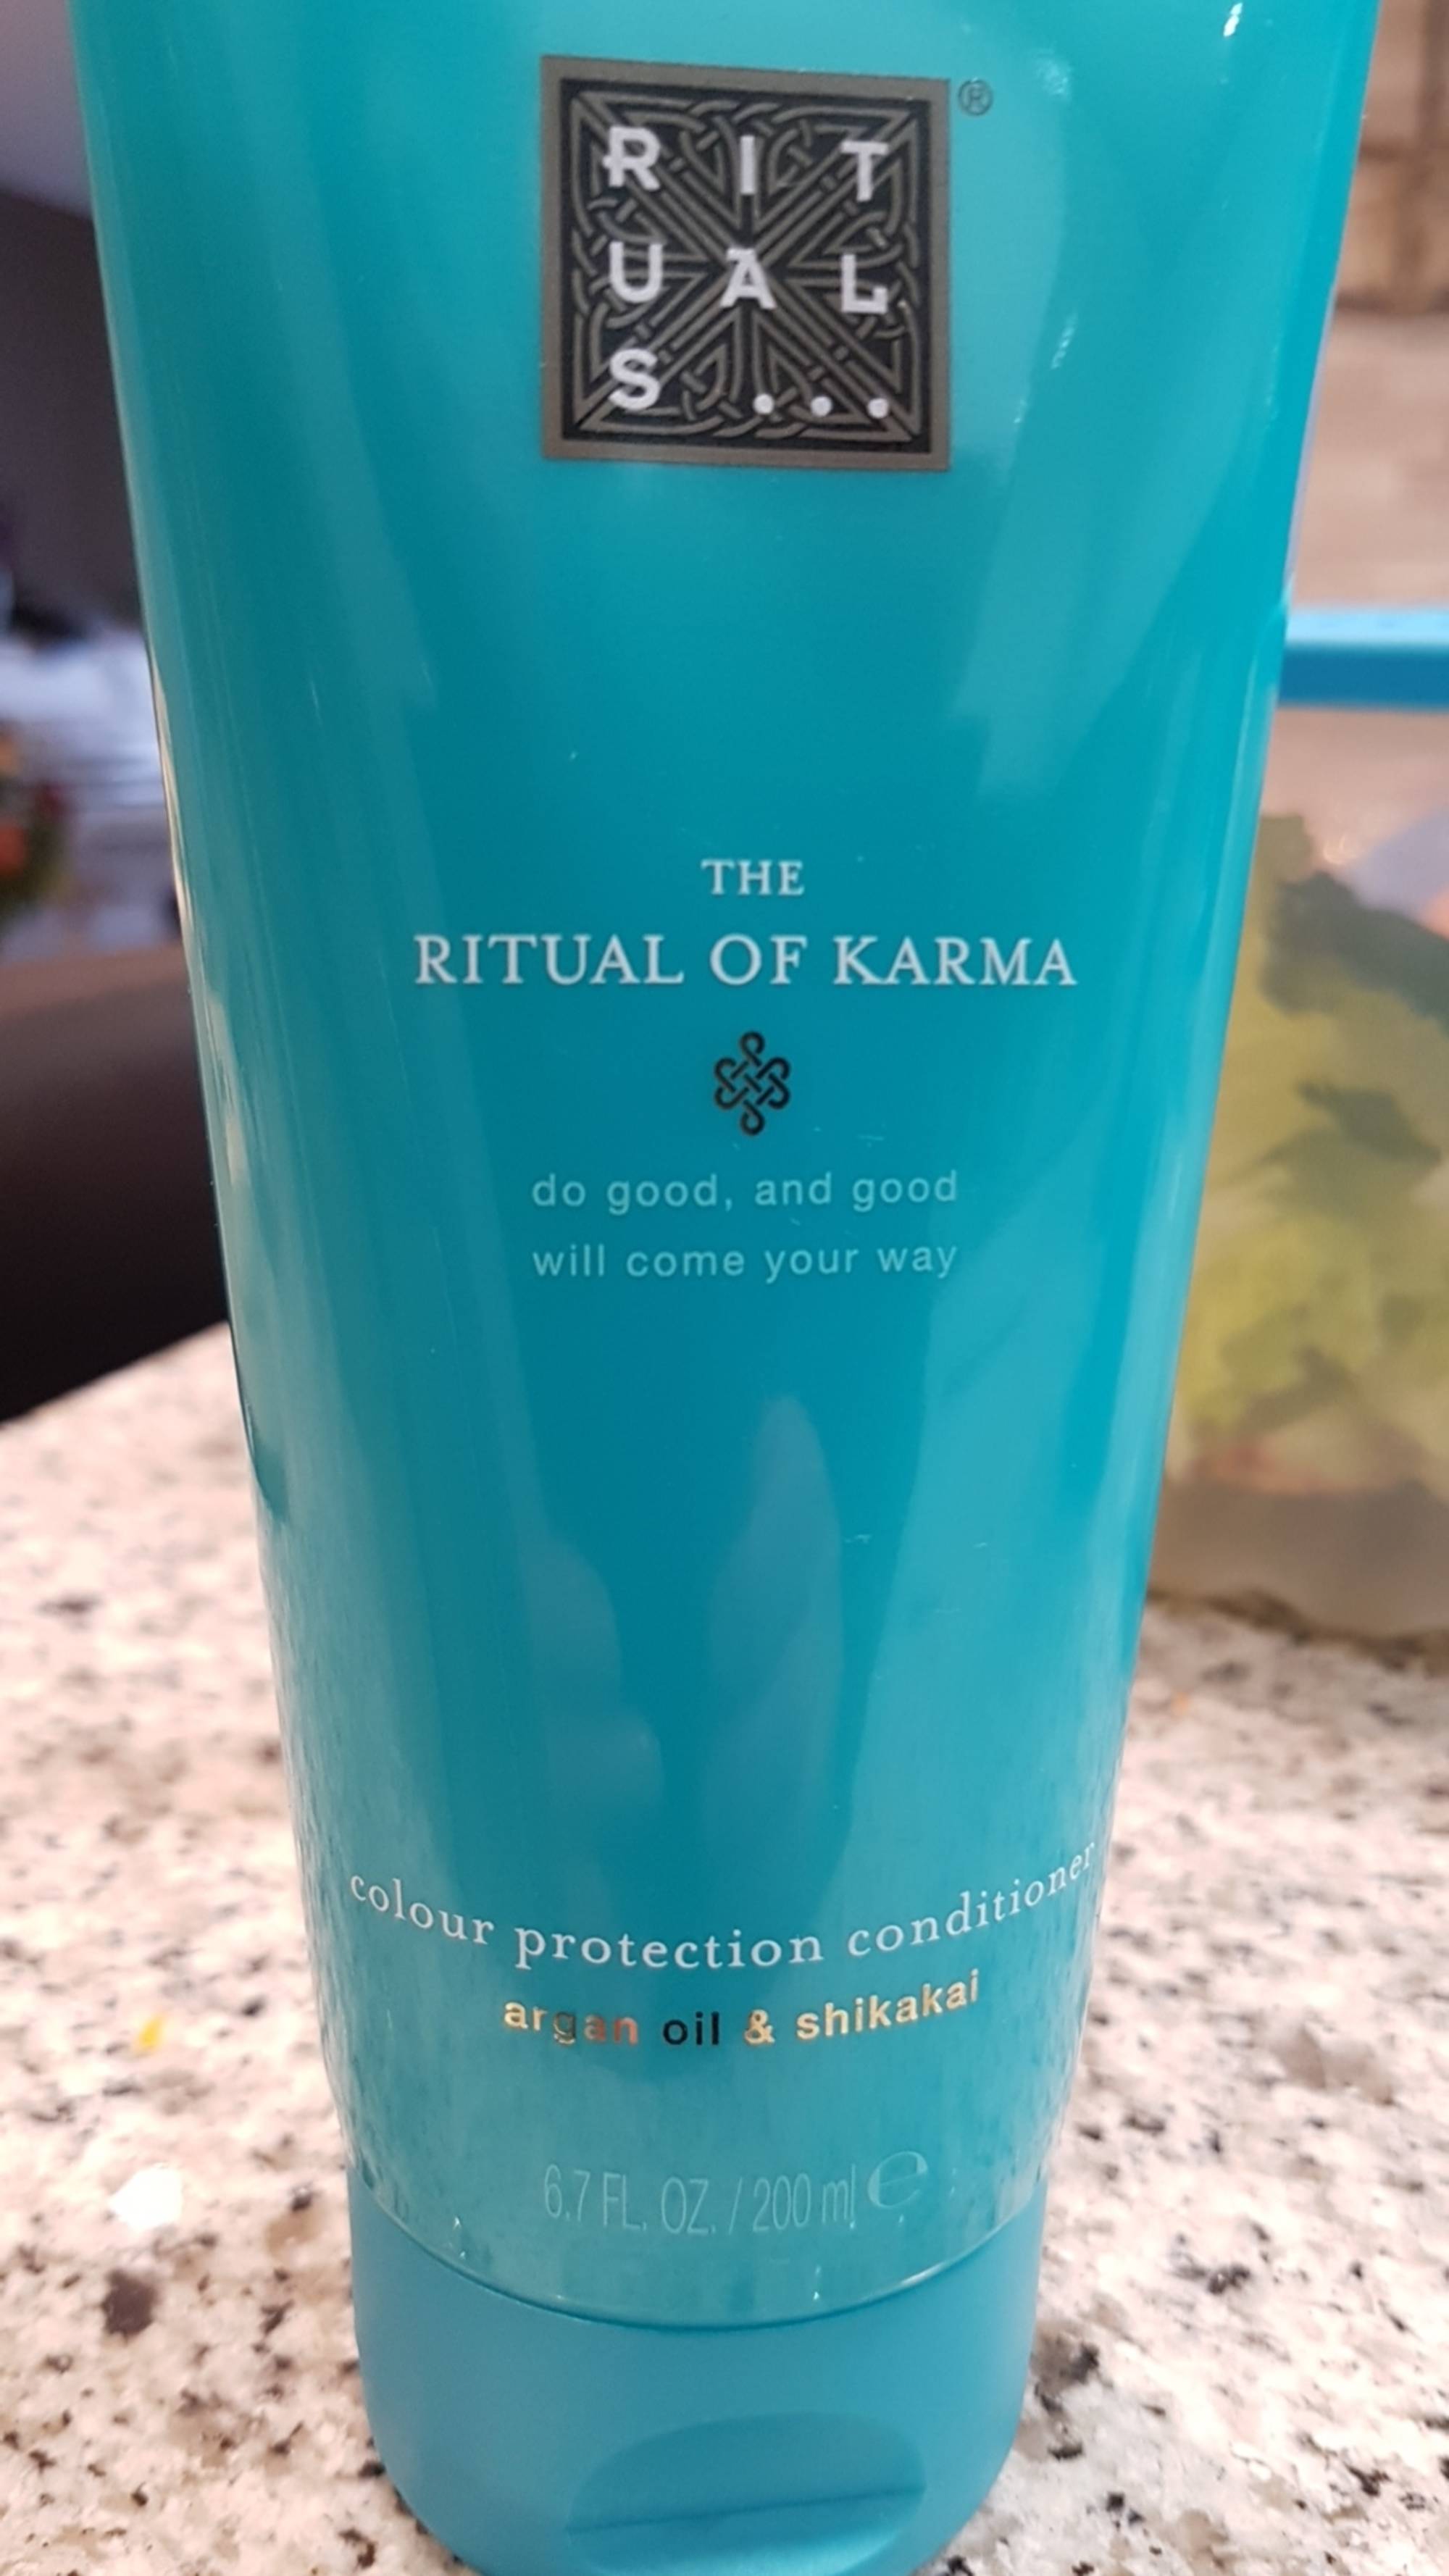 RITUALS - The ritual of karma - Colour protection conditioner